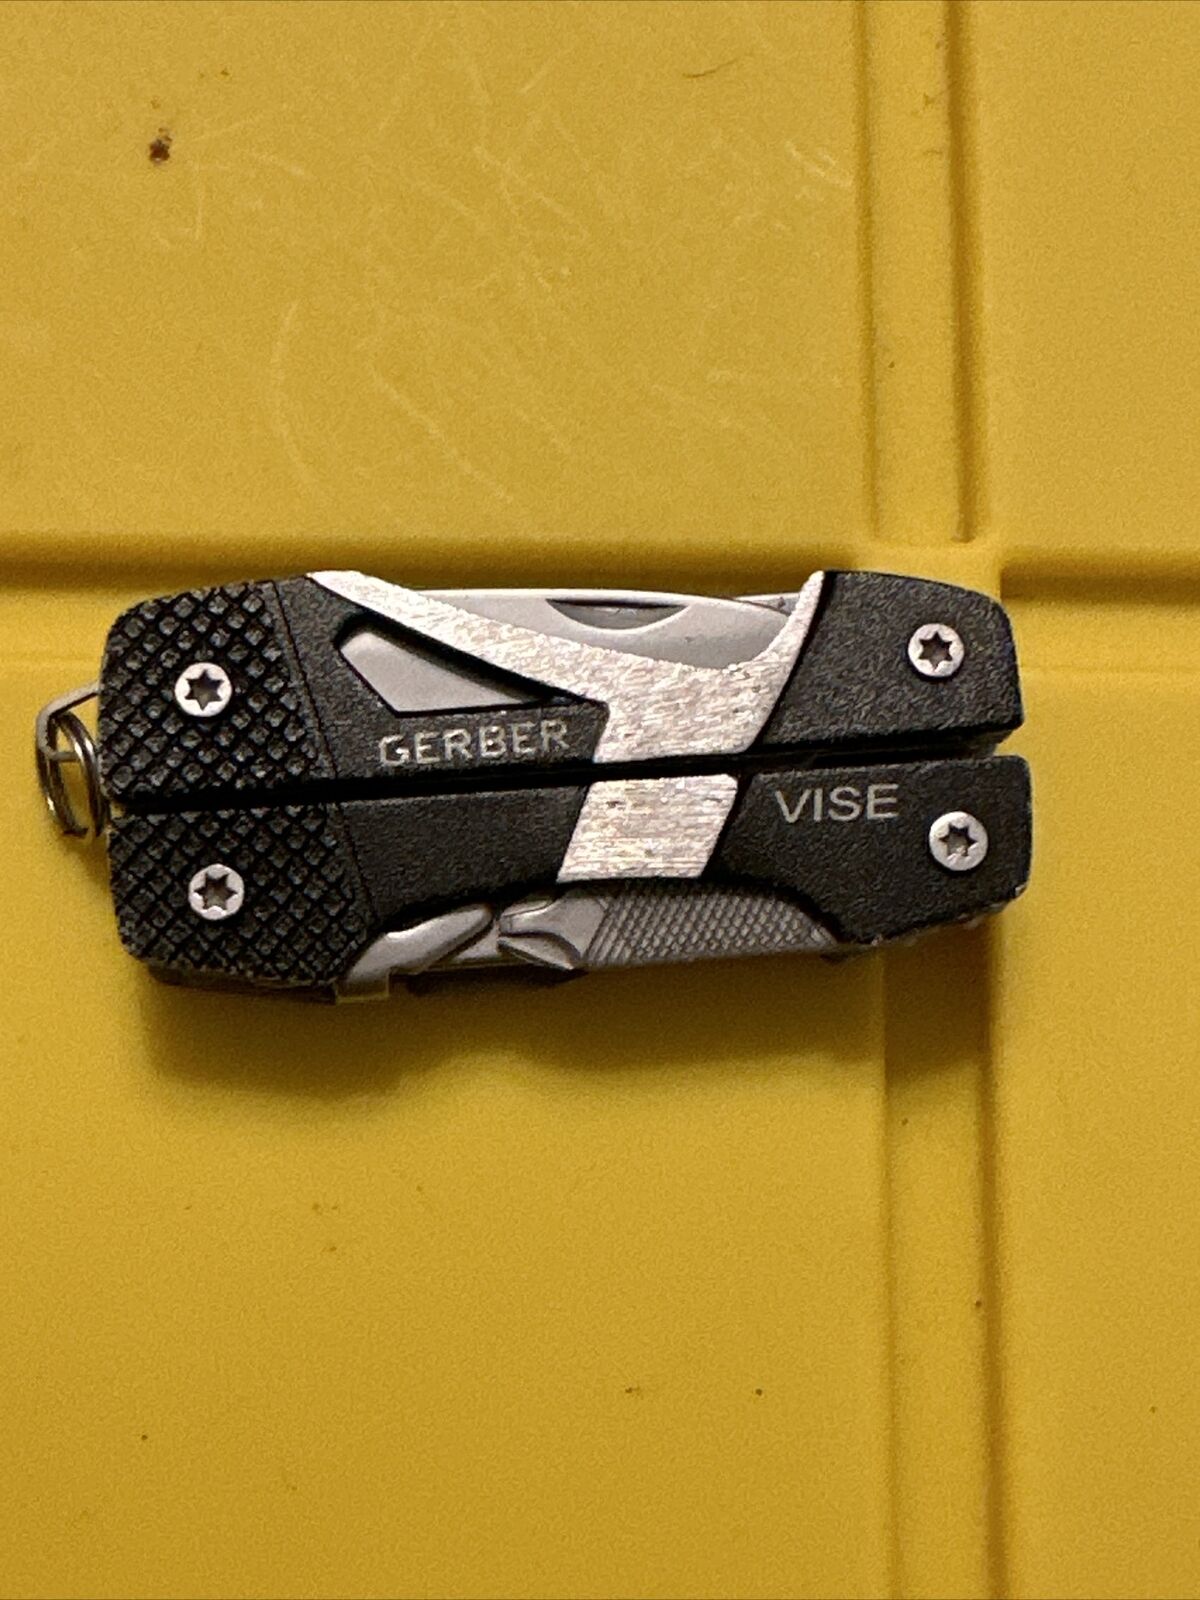 Stainless GERBER Vise Folding Pocket Knife Multi-Tool w/Saw & Screw Driver